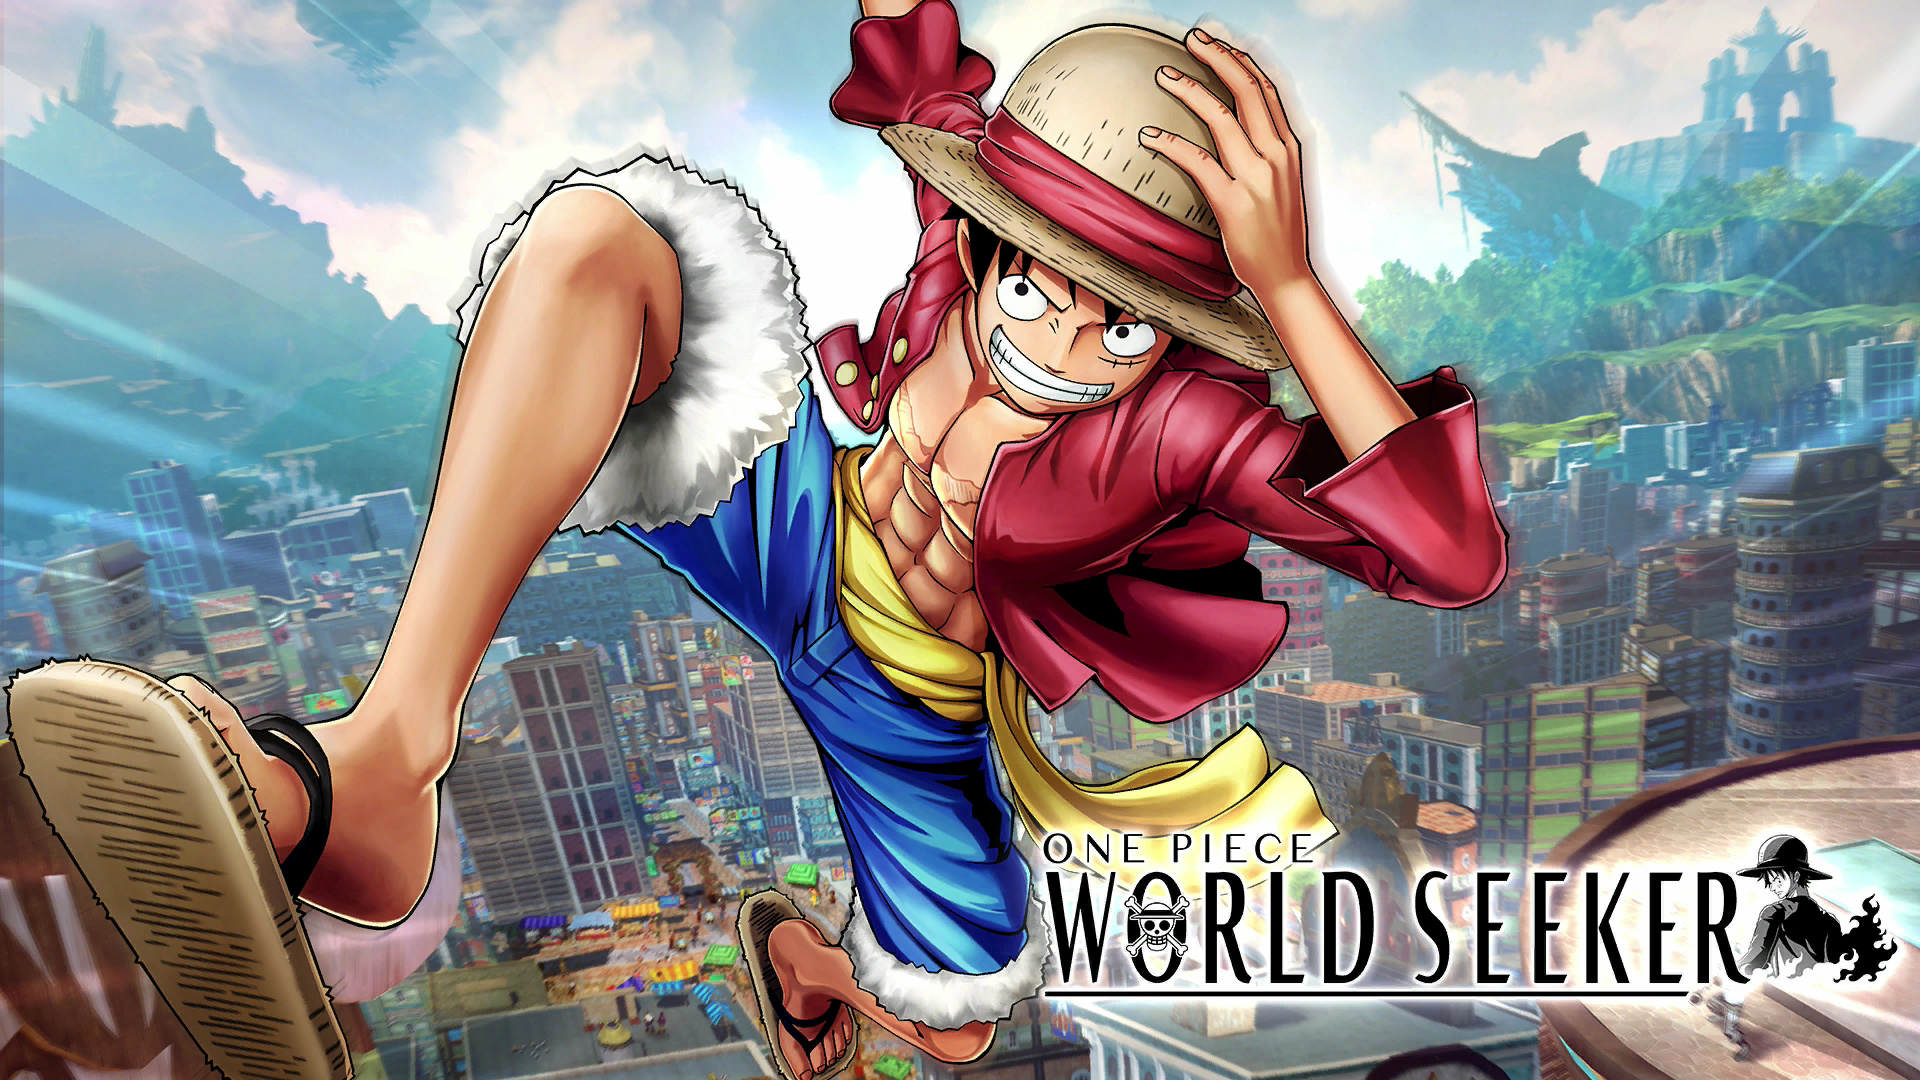 One Piece World Seeker Review - Just Push Start